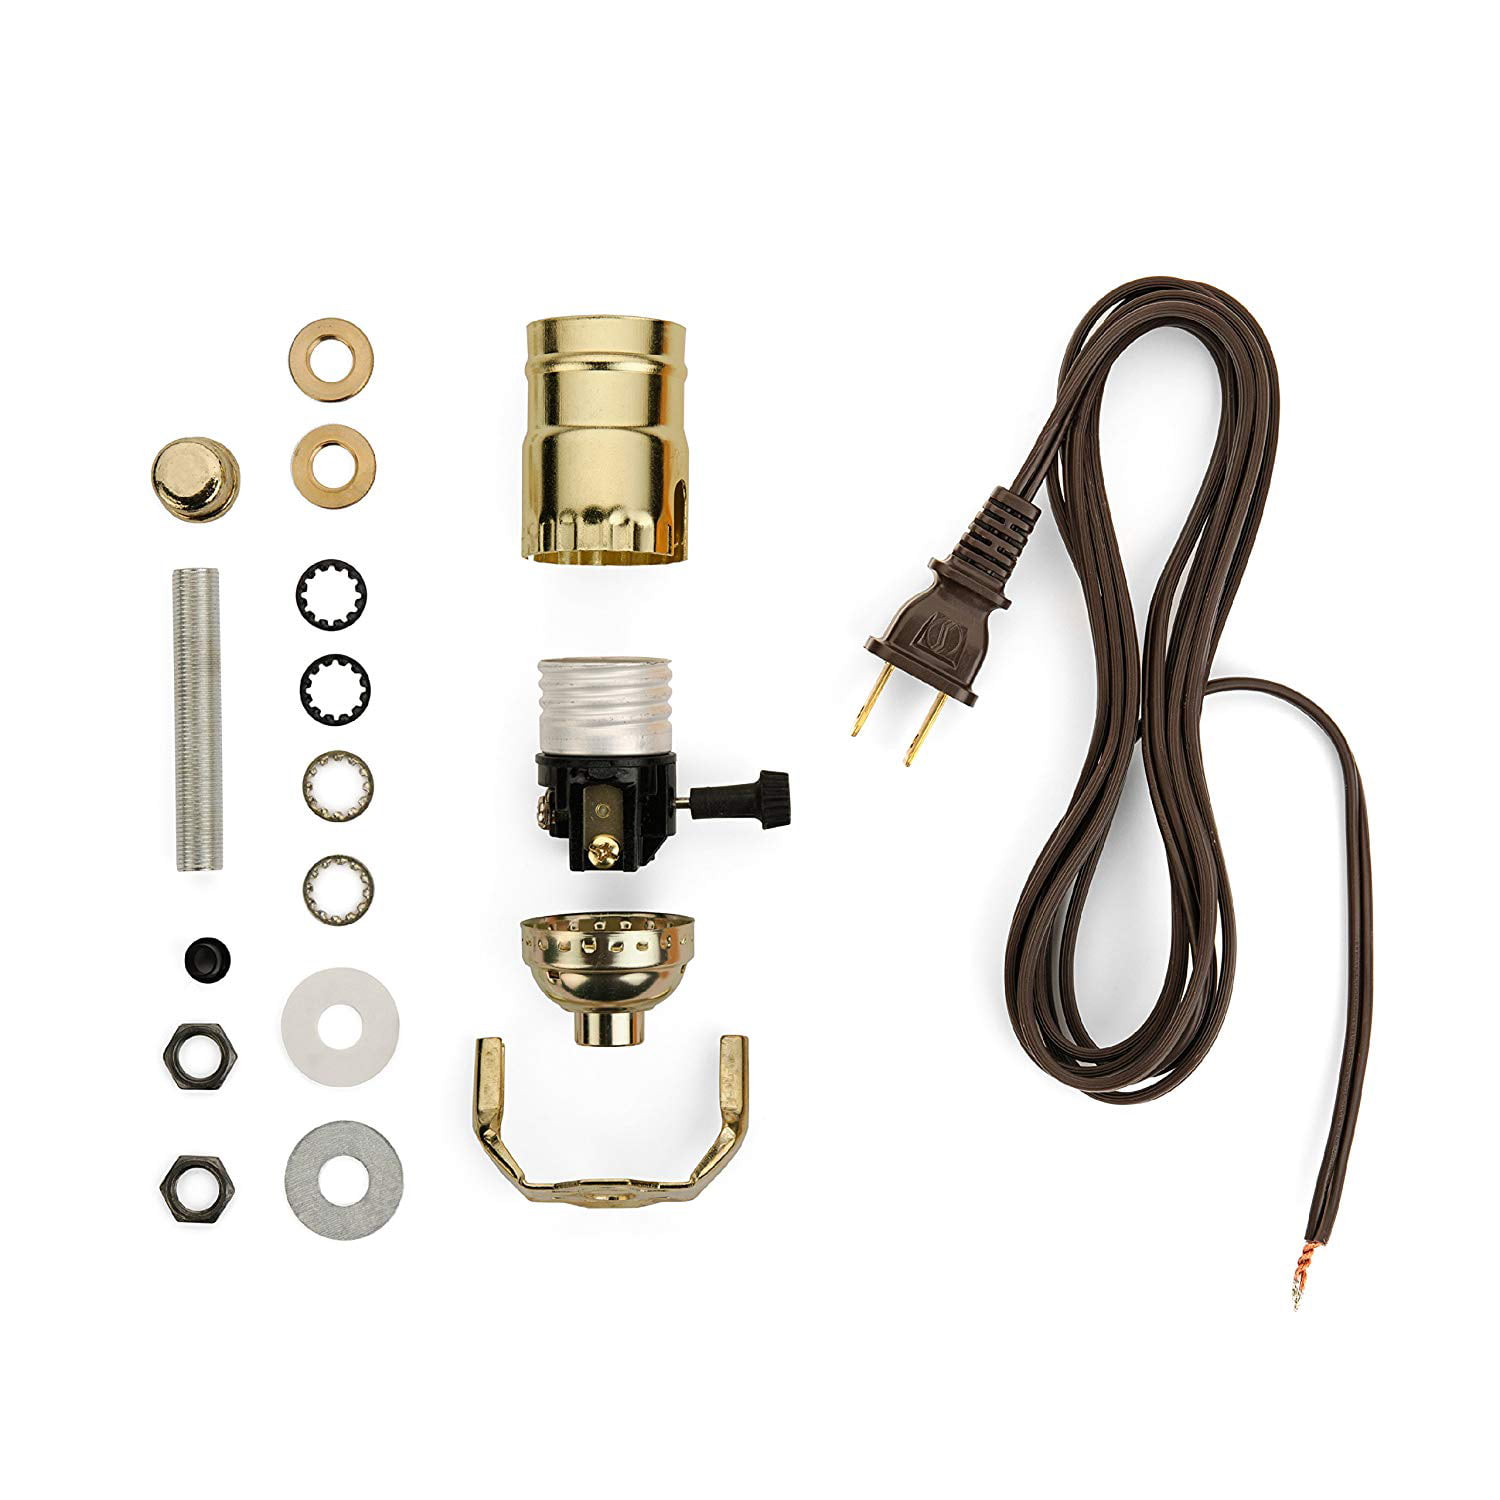 Lamp Wiring Kit - Make, Repurpose or Repair an Old Lamp with a Lamp Wire  Kit - Brass- Plated Socket - 12 Foot Long Brown Cord - DIY Lamp Making Kits  Allow